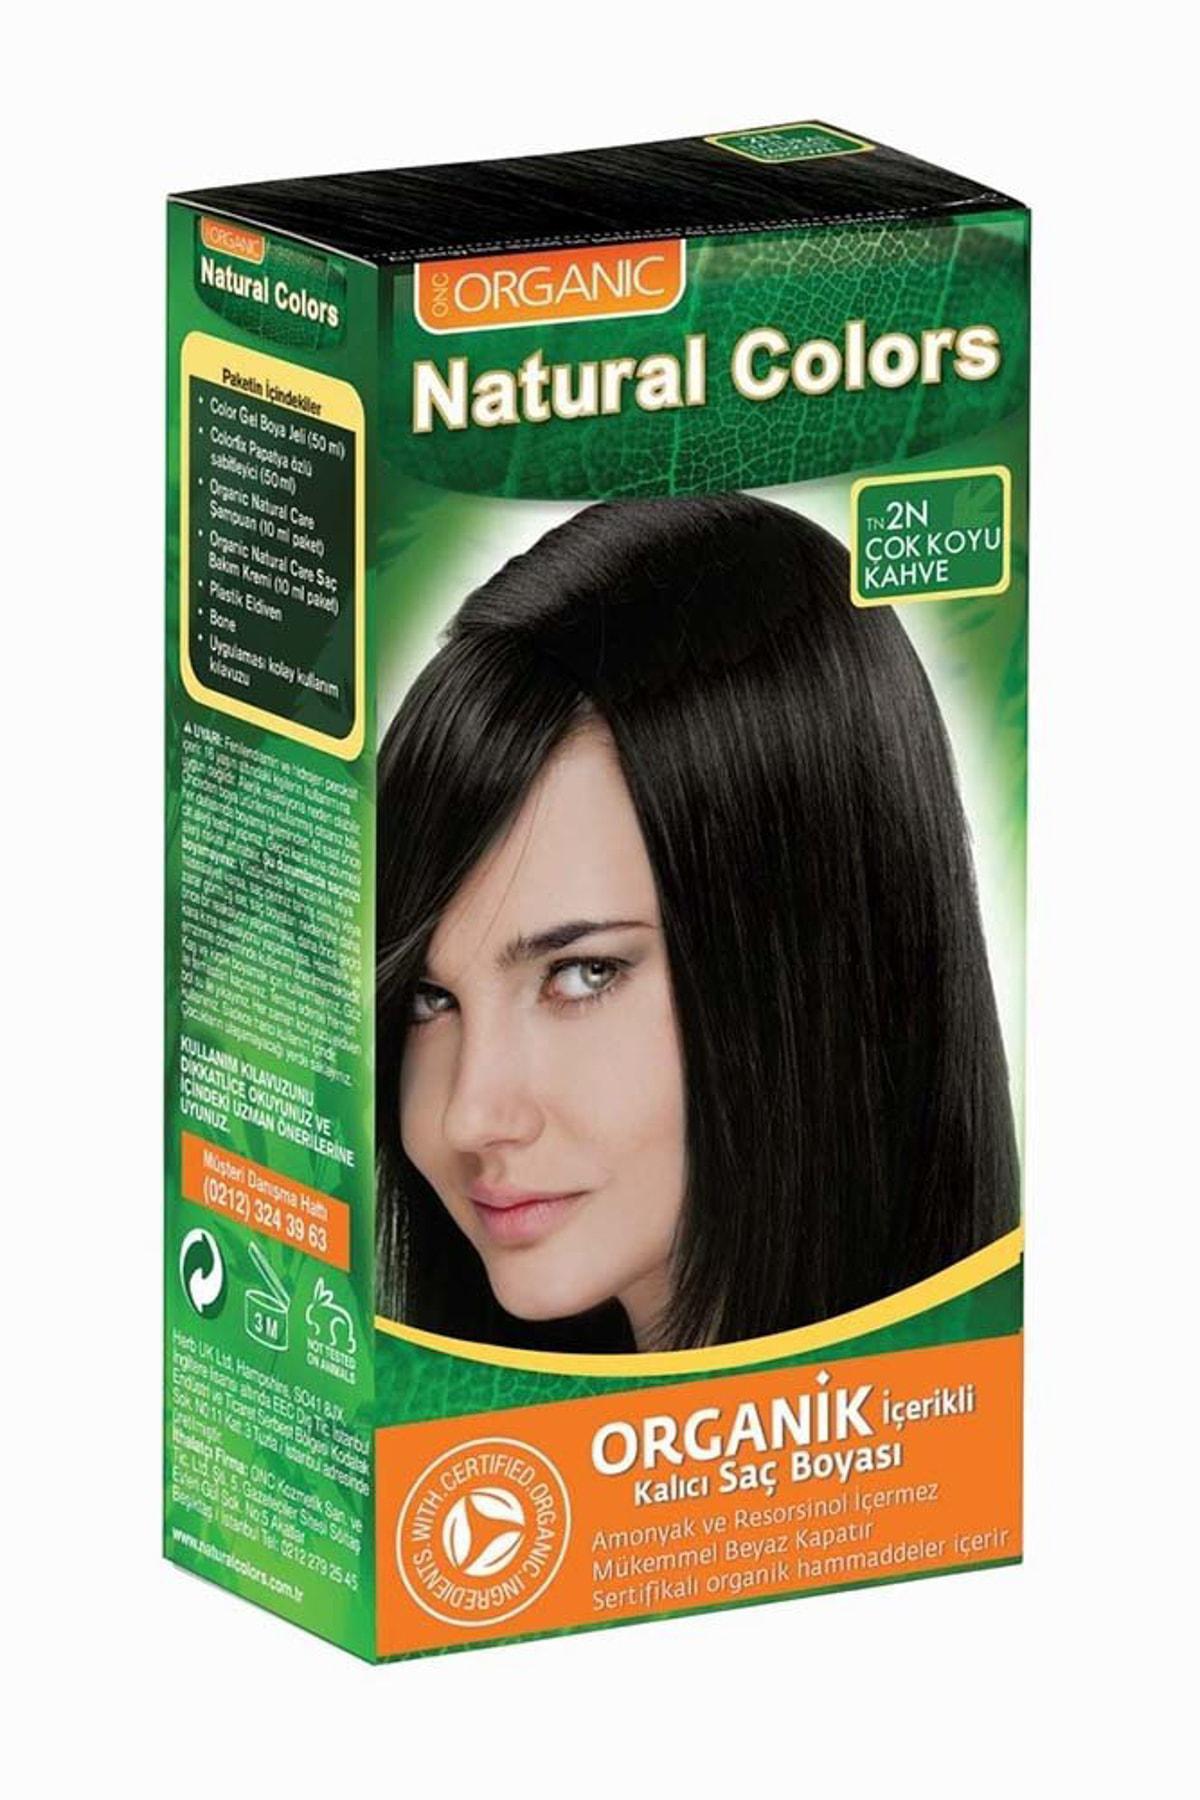 Natural Colors 2N Çok Koyu Kahve Organik Krem Saç Boyası